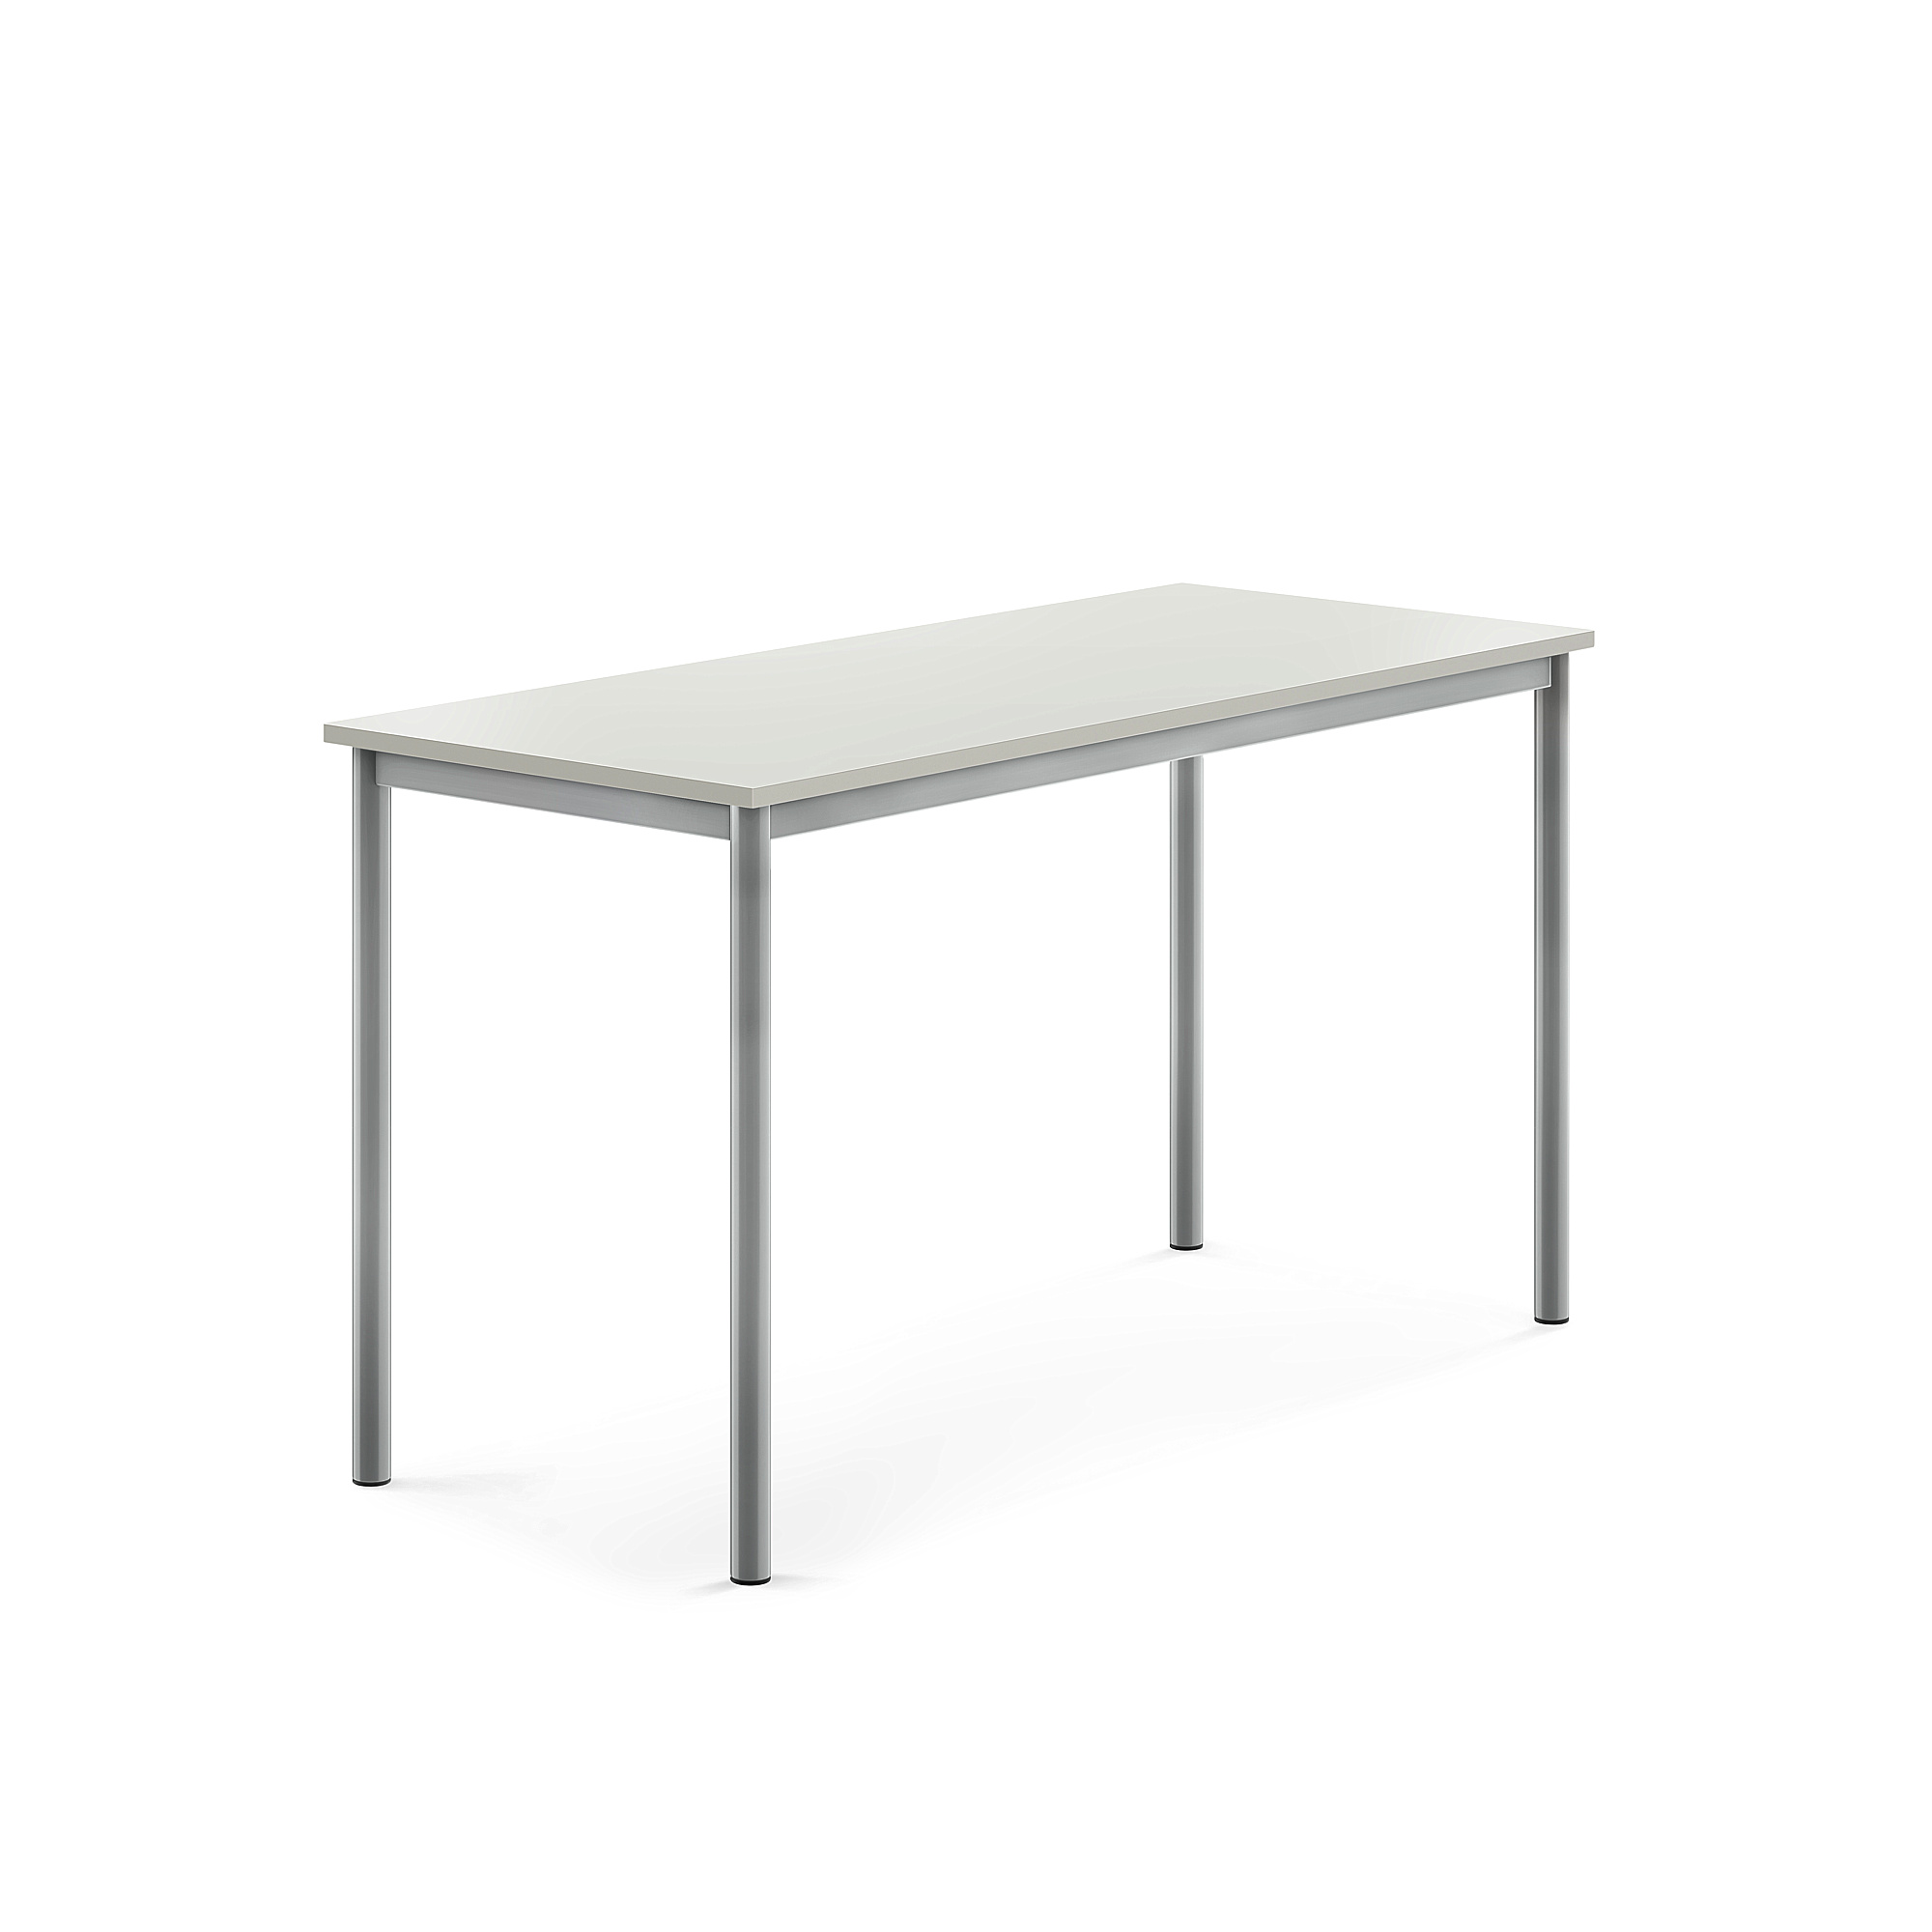 Stůl BORÅS, 1400x600x760 mm, stříbrné nohy, HPL deska, šedá